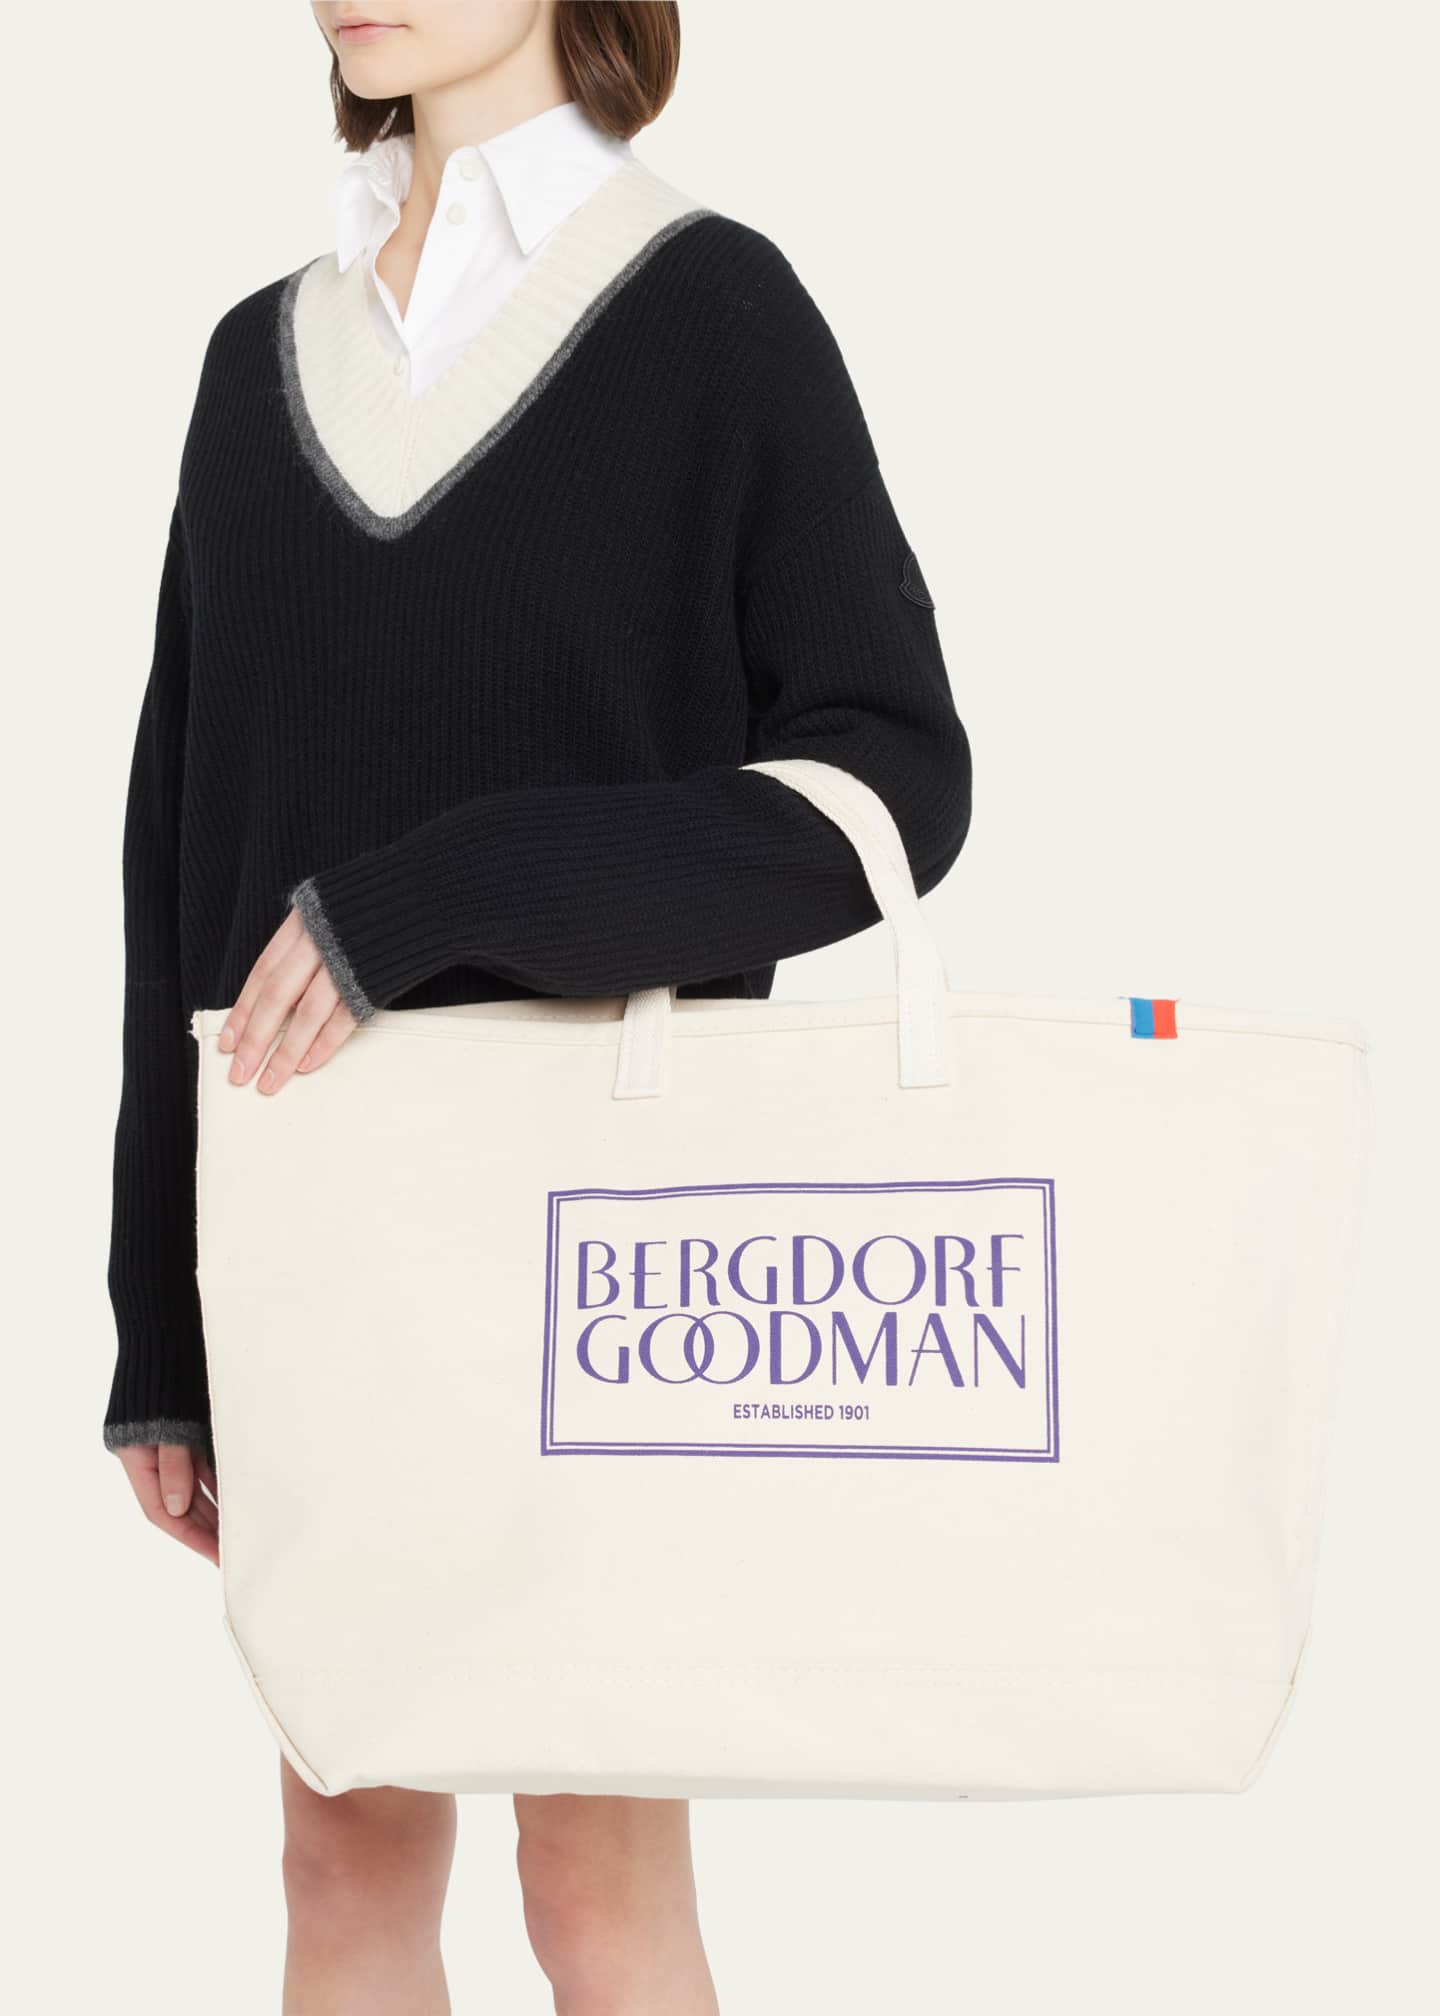 BERDORF GOODMAN Makeup's Bag  Bags, Makeup bag, Women shopping